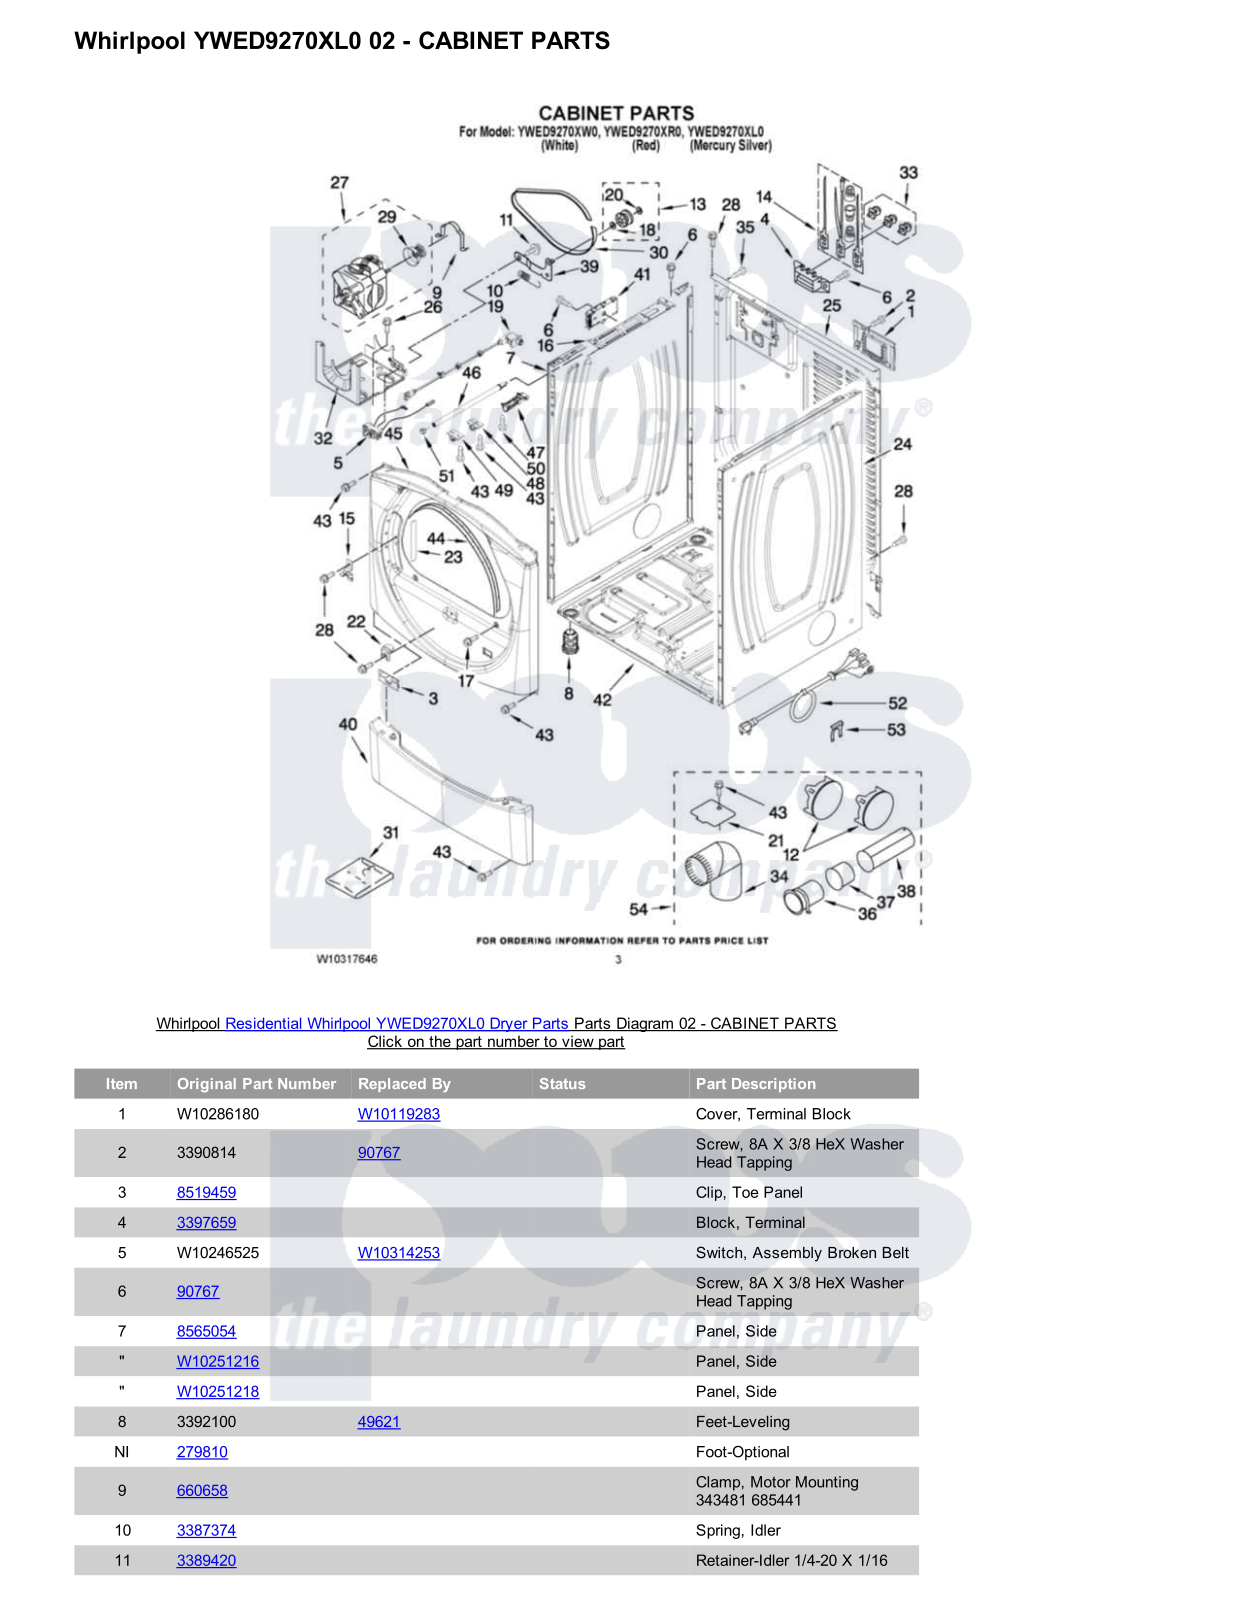 Whirlpool YWED9270XL0 Parts Diagram